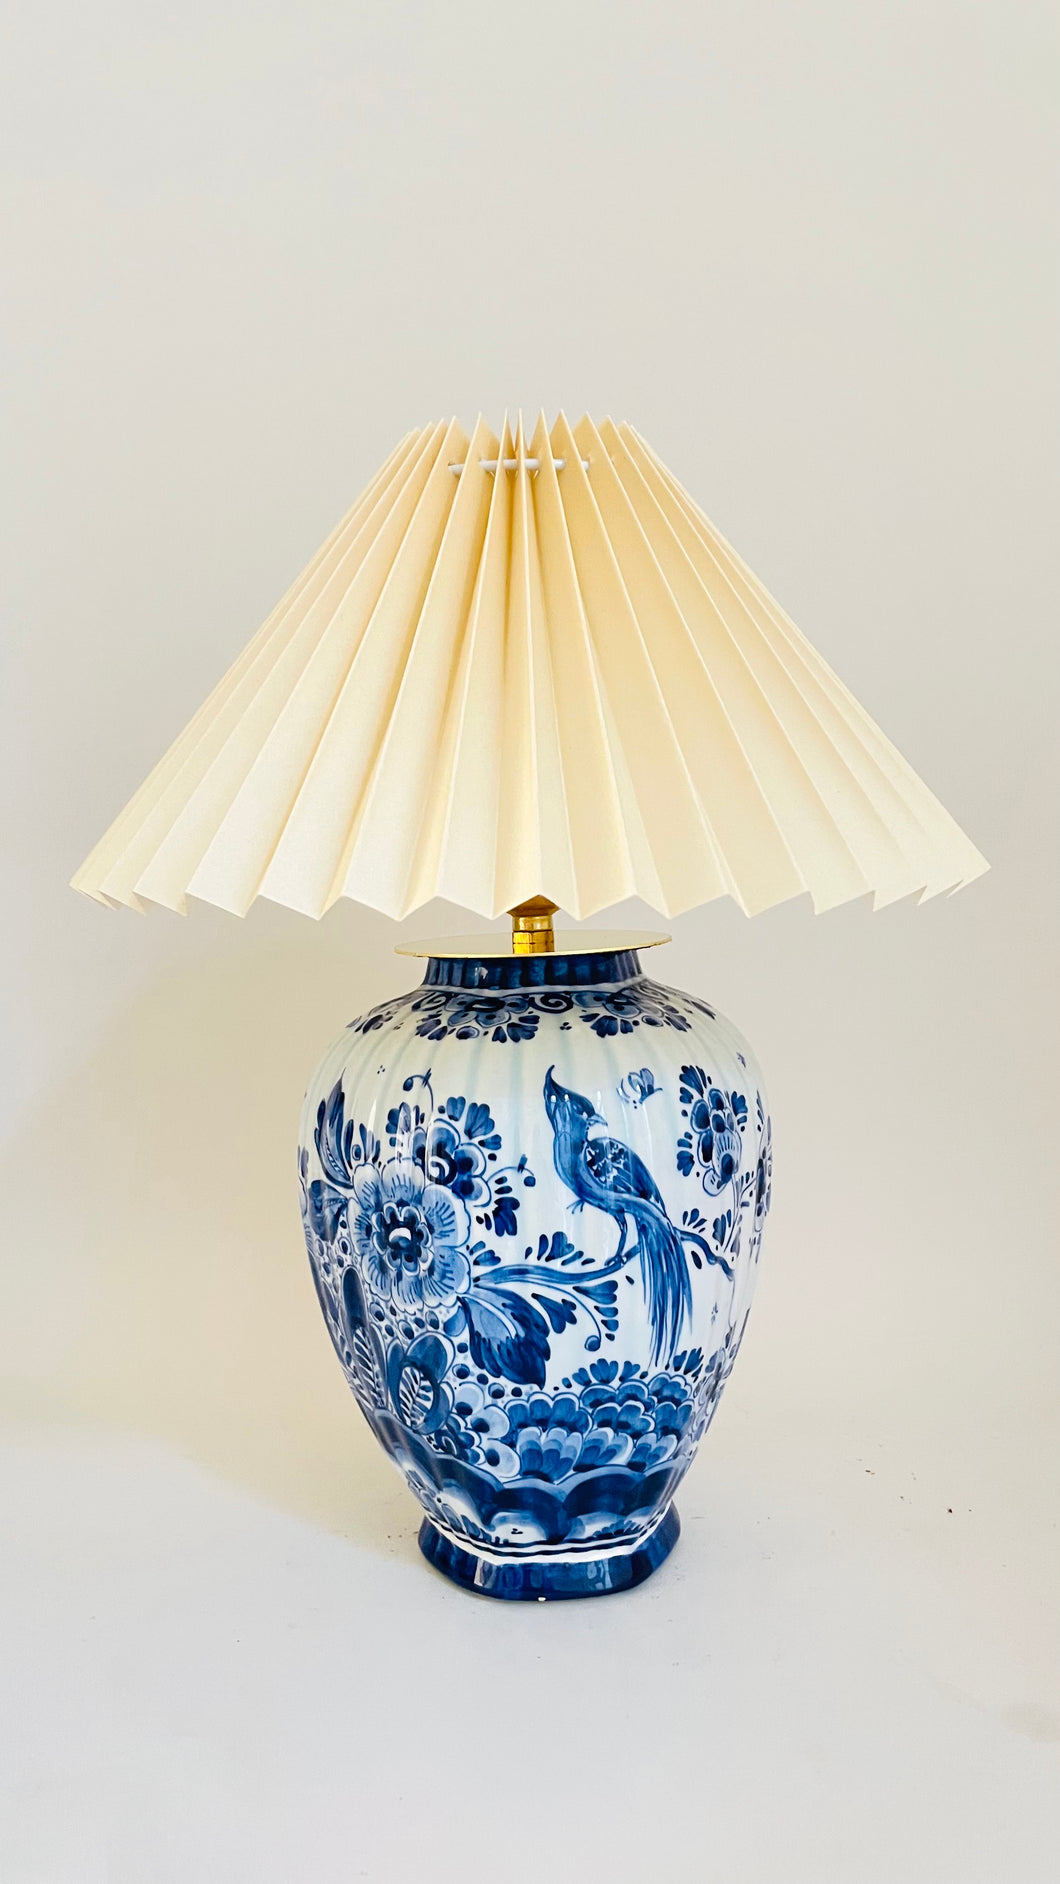 Antique Mini Delft Lamp 'The Swan' - pre order for mid April